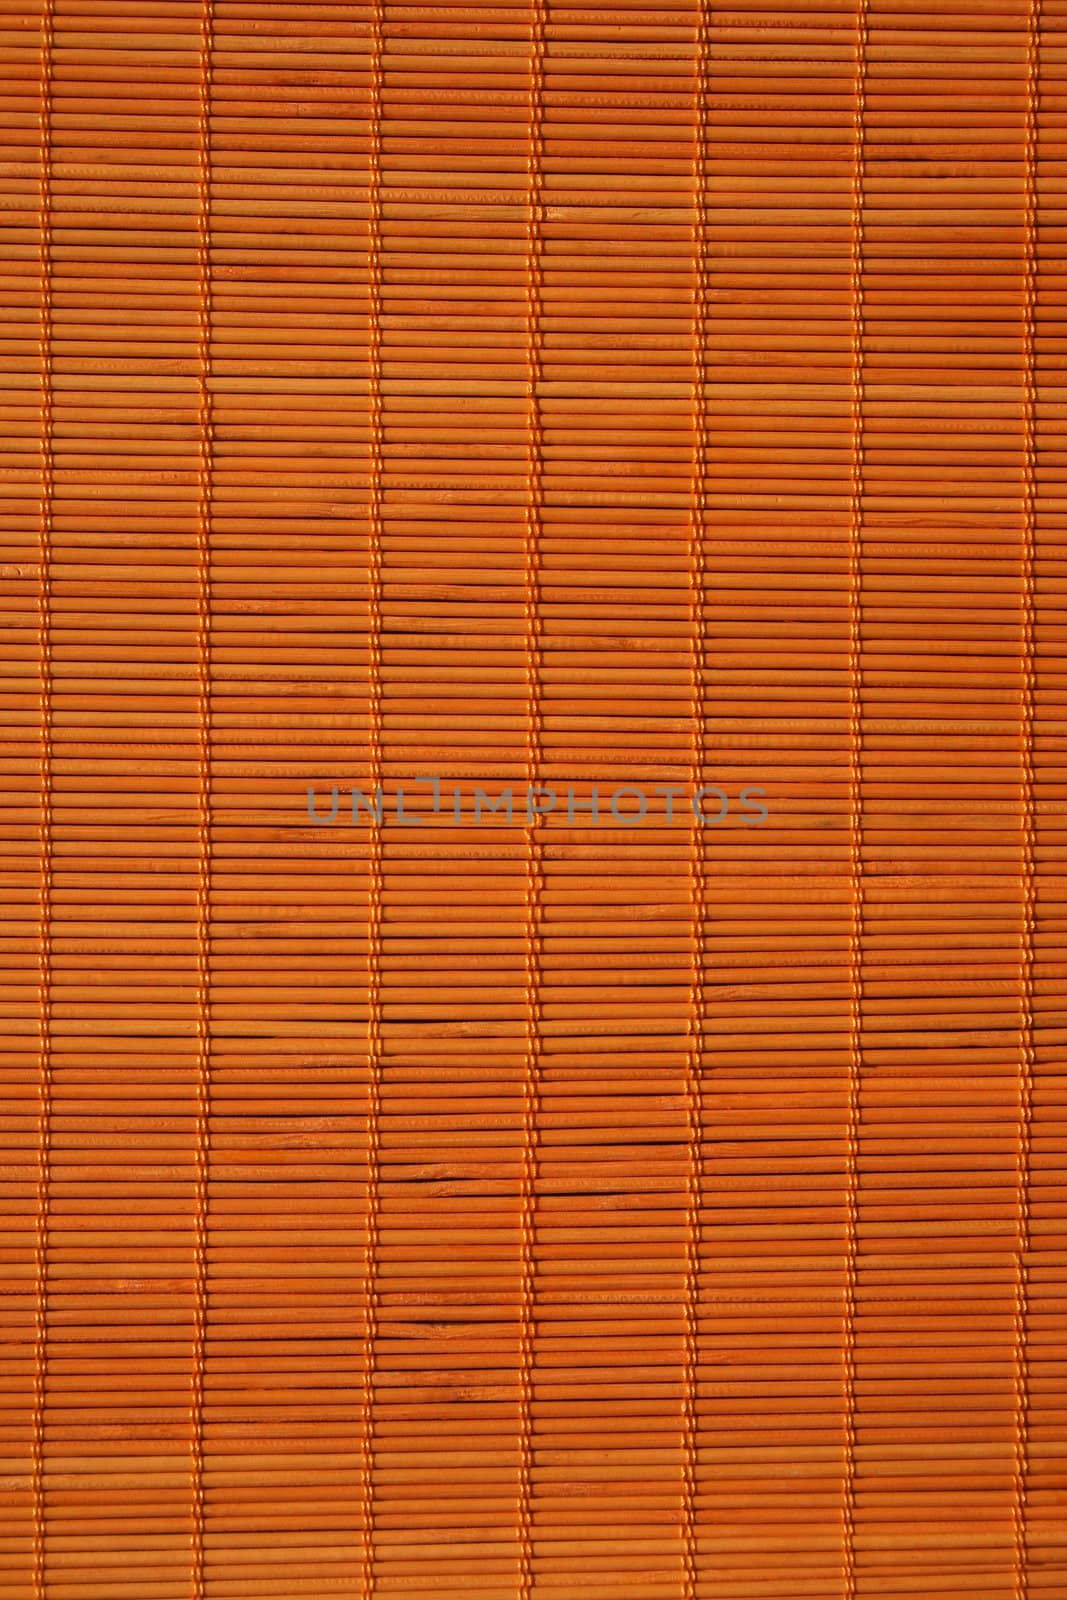 Background: warm orange color of rattan texture.